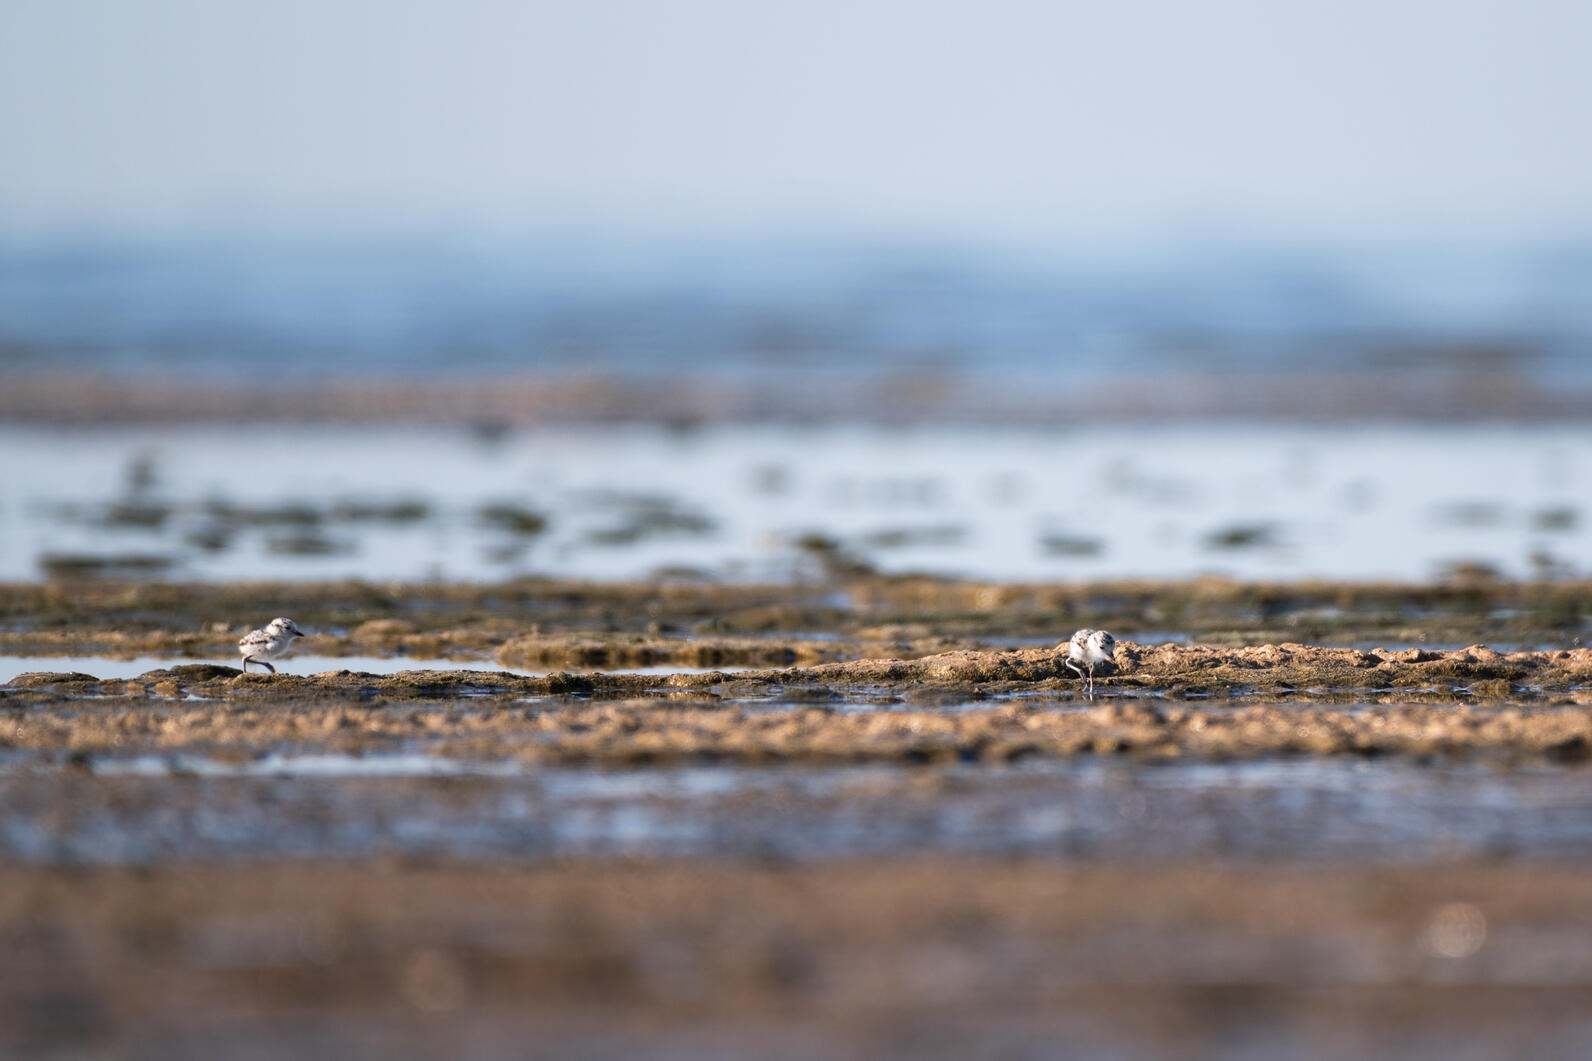 Snowy Plover chicks at the Salton Sea shore